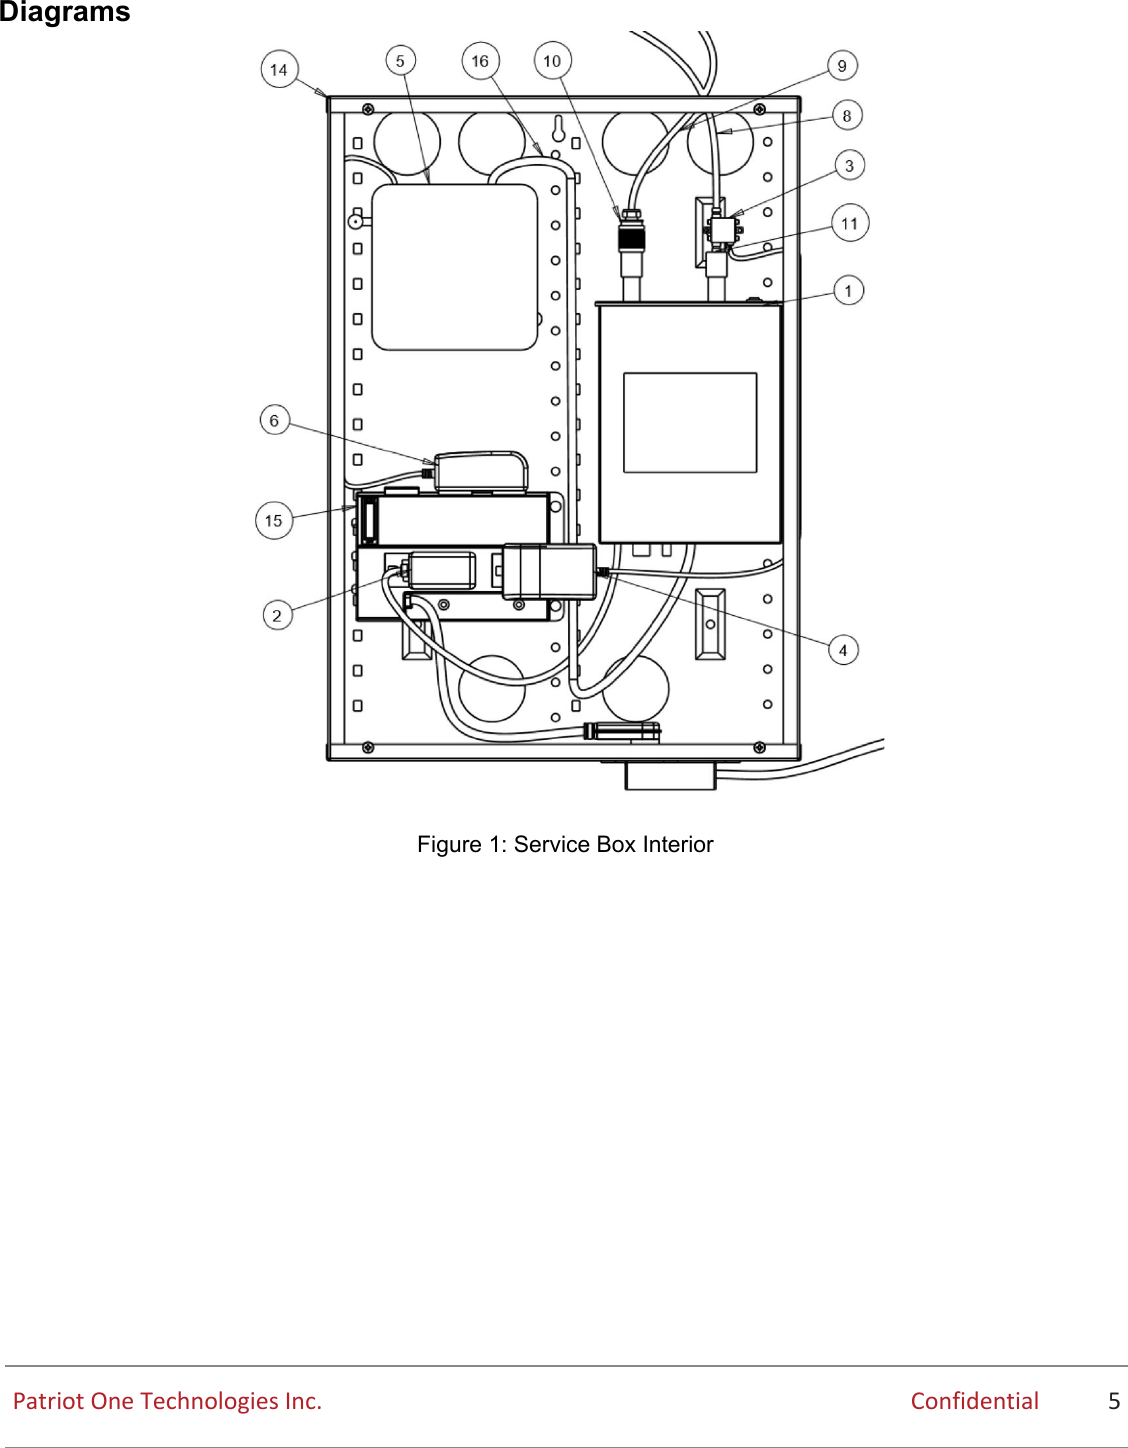 Diagrams  Figure 1: Service Box Interior    Patriot One Technologies Inc. Confidential         5   